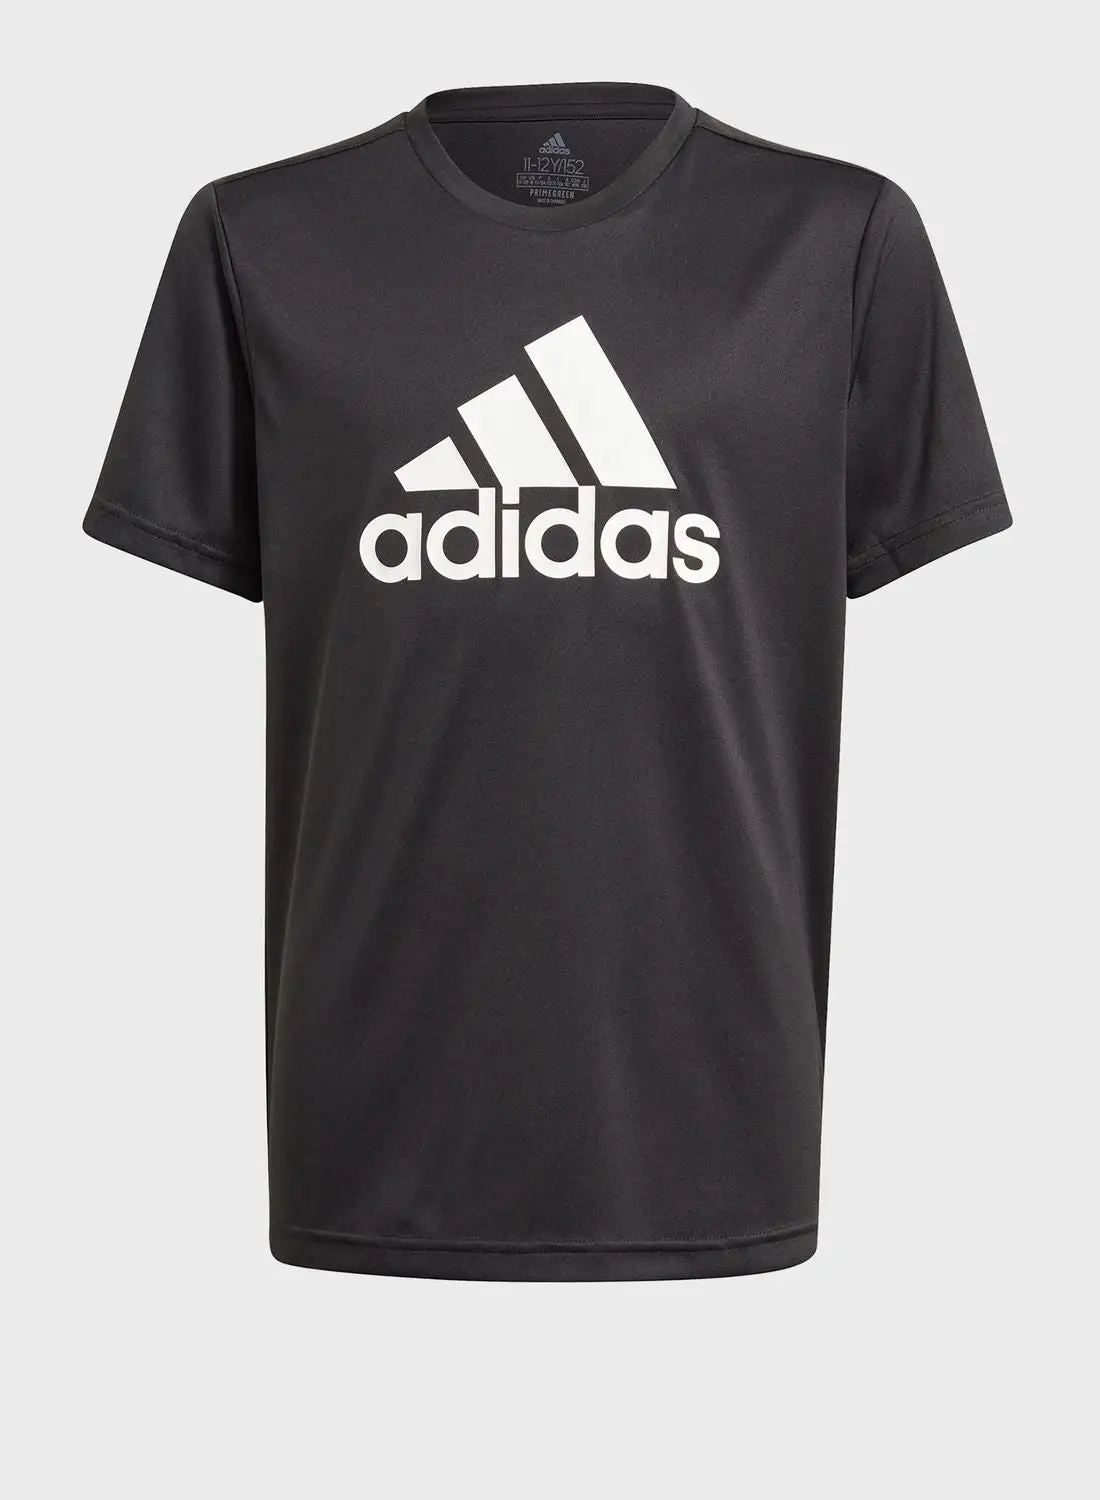 Adidas Youth Big Logo T-Shirt